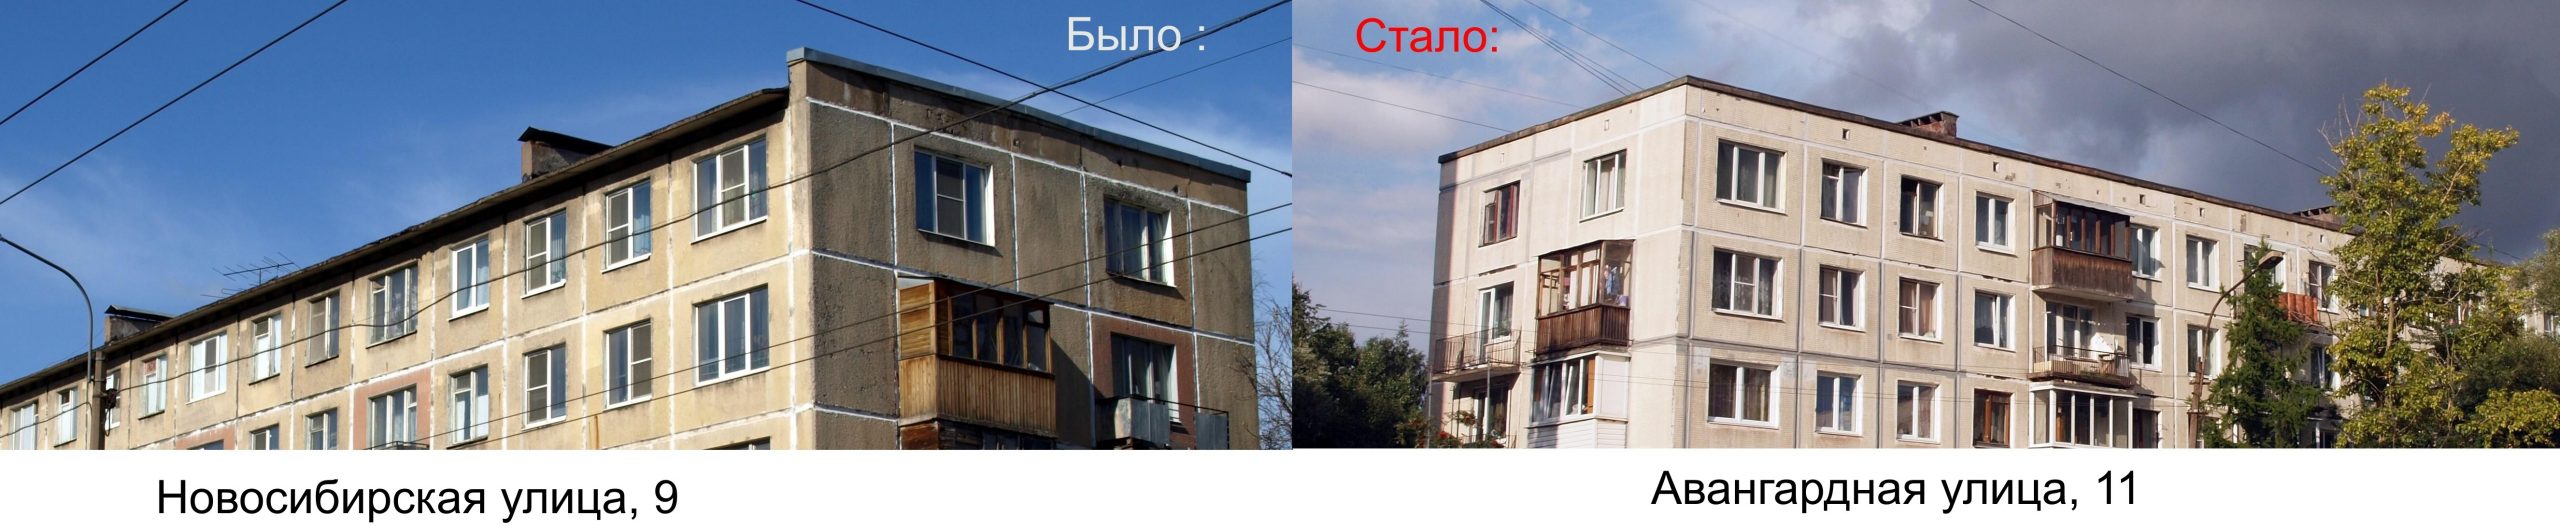 Hus olika våningsnivåer